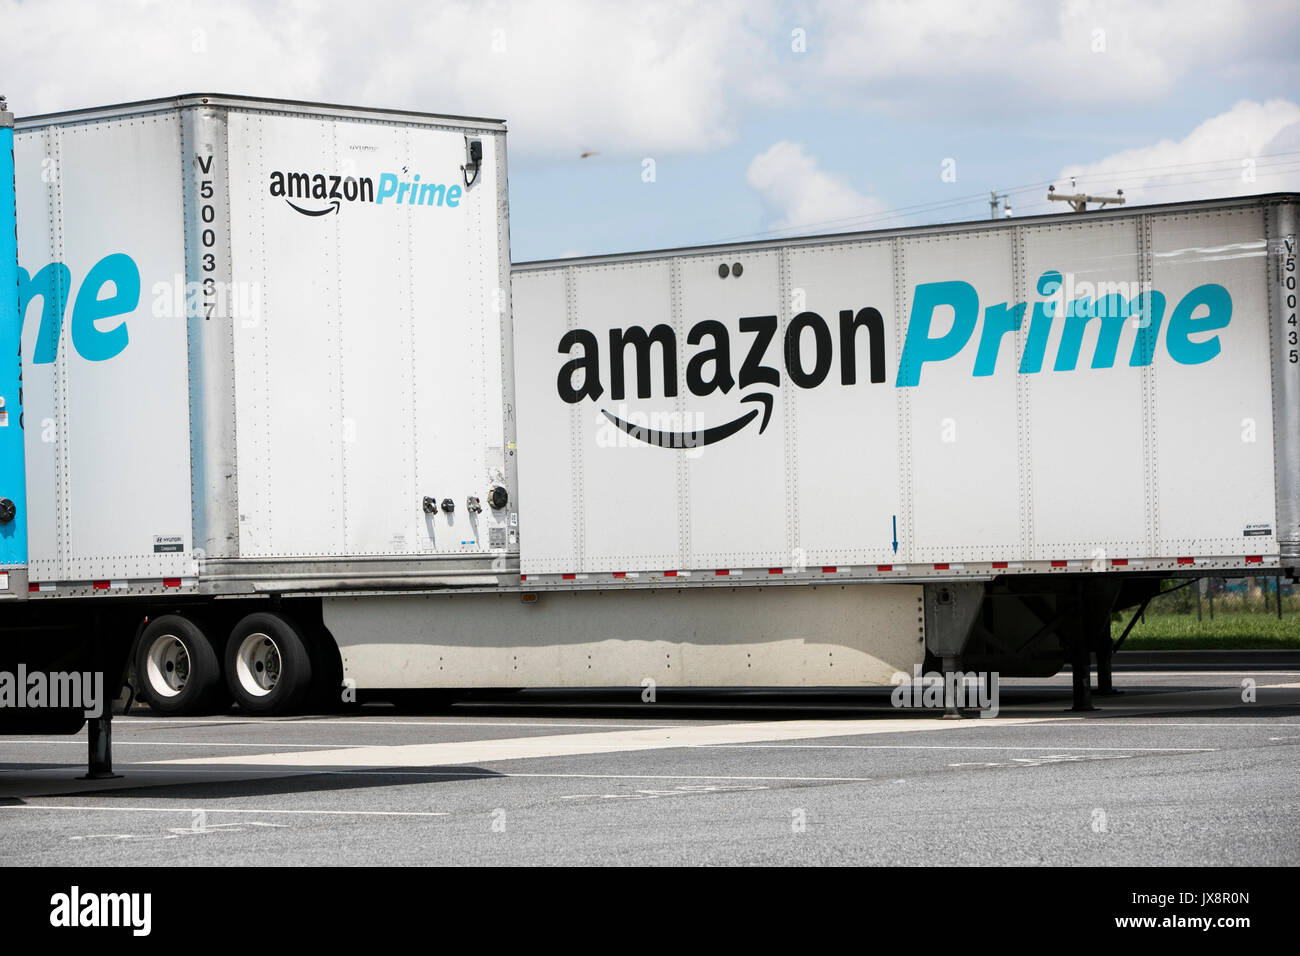 Amazon prime truck -Fotos und -Bildmaterial in hoher Auflösung – Alamy